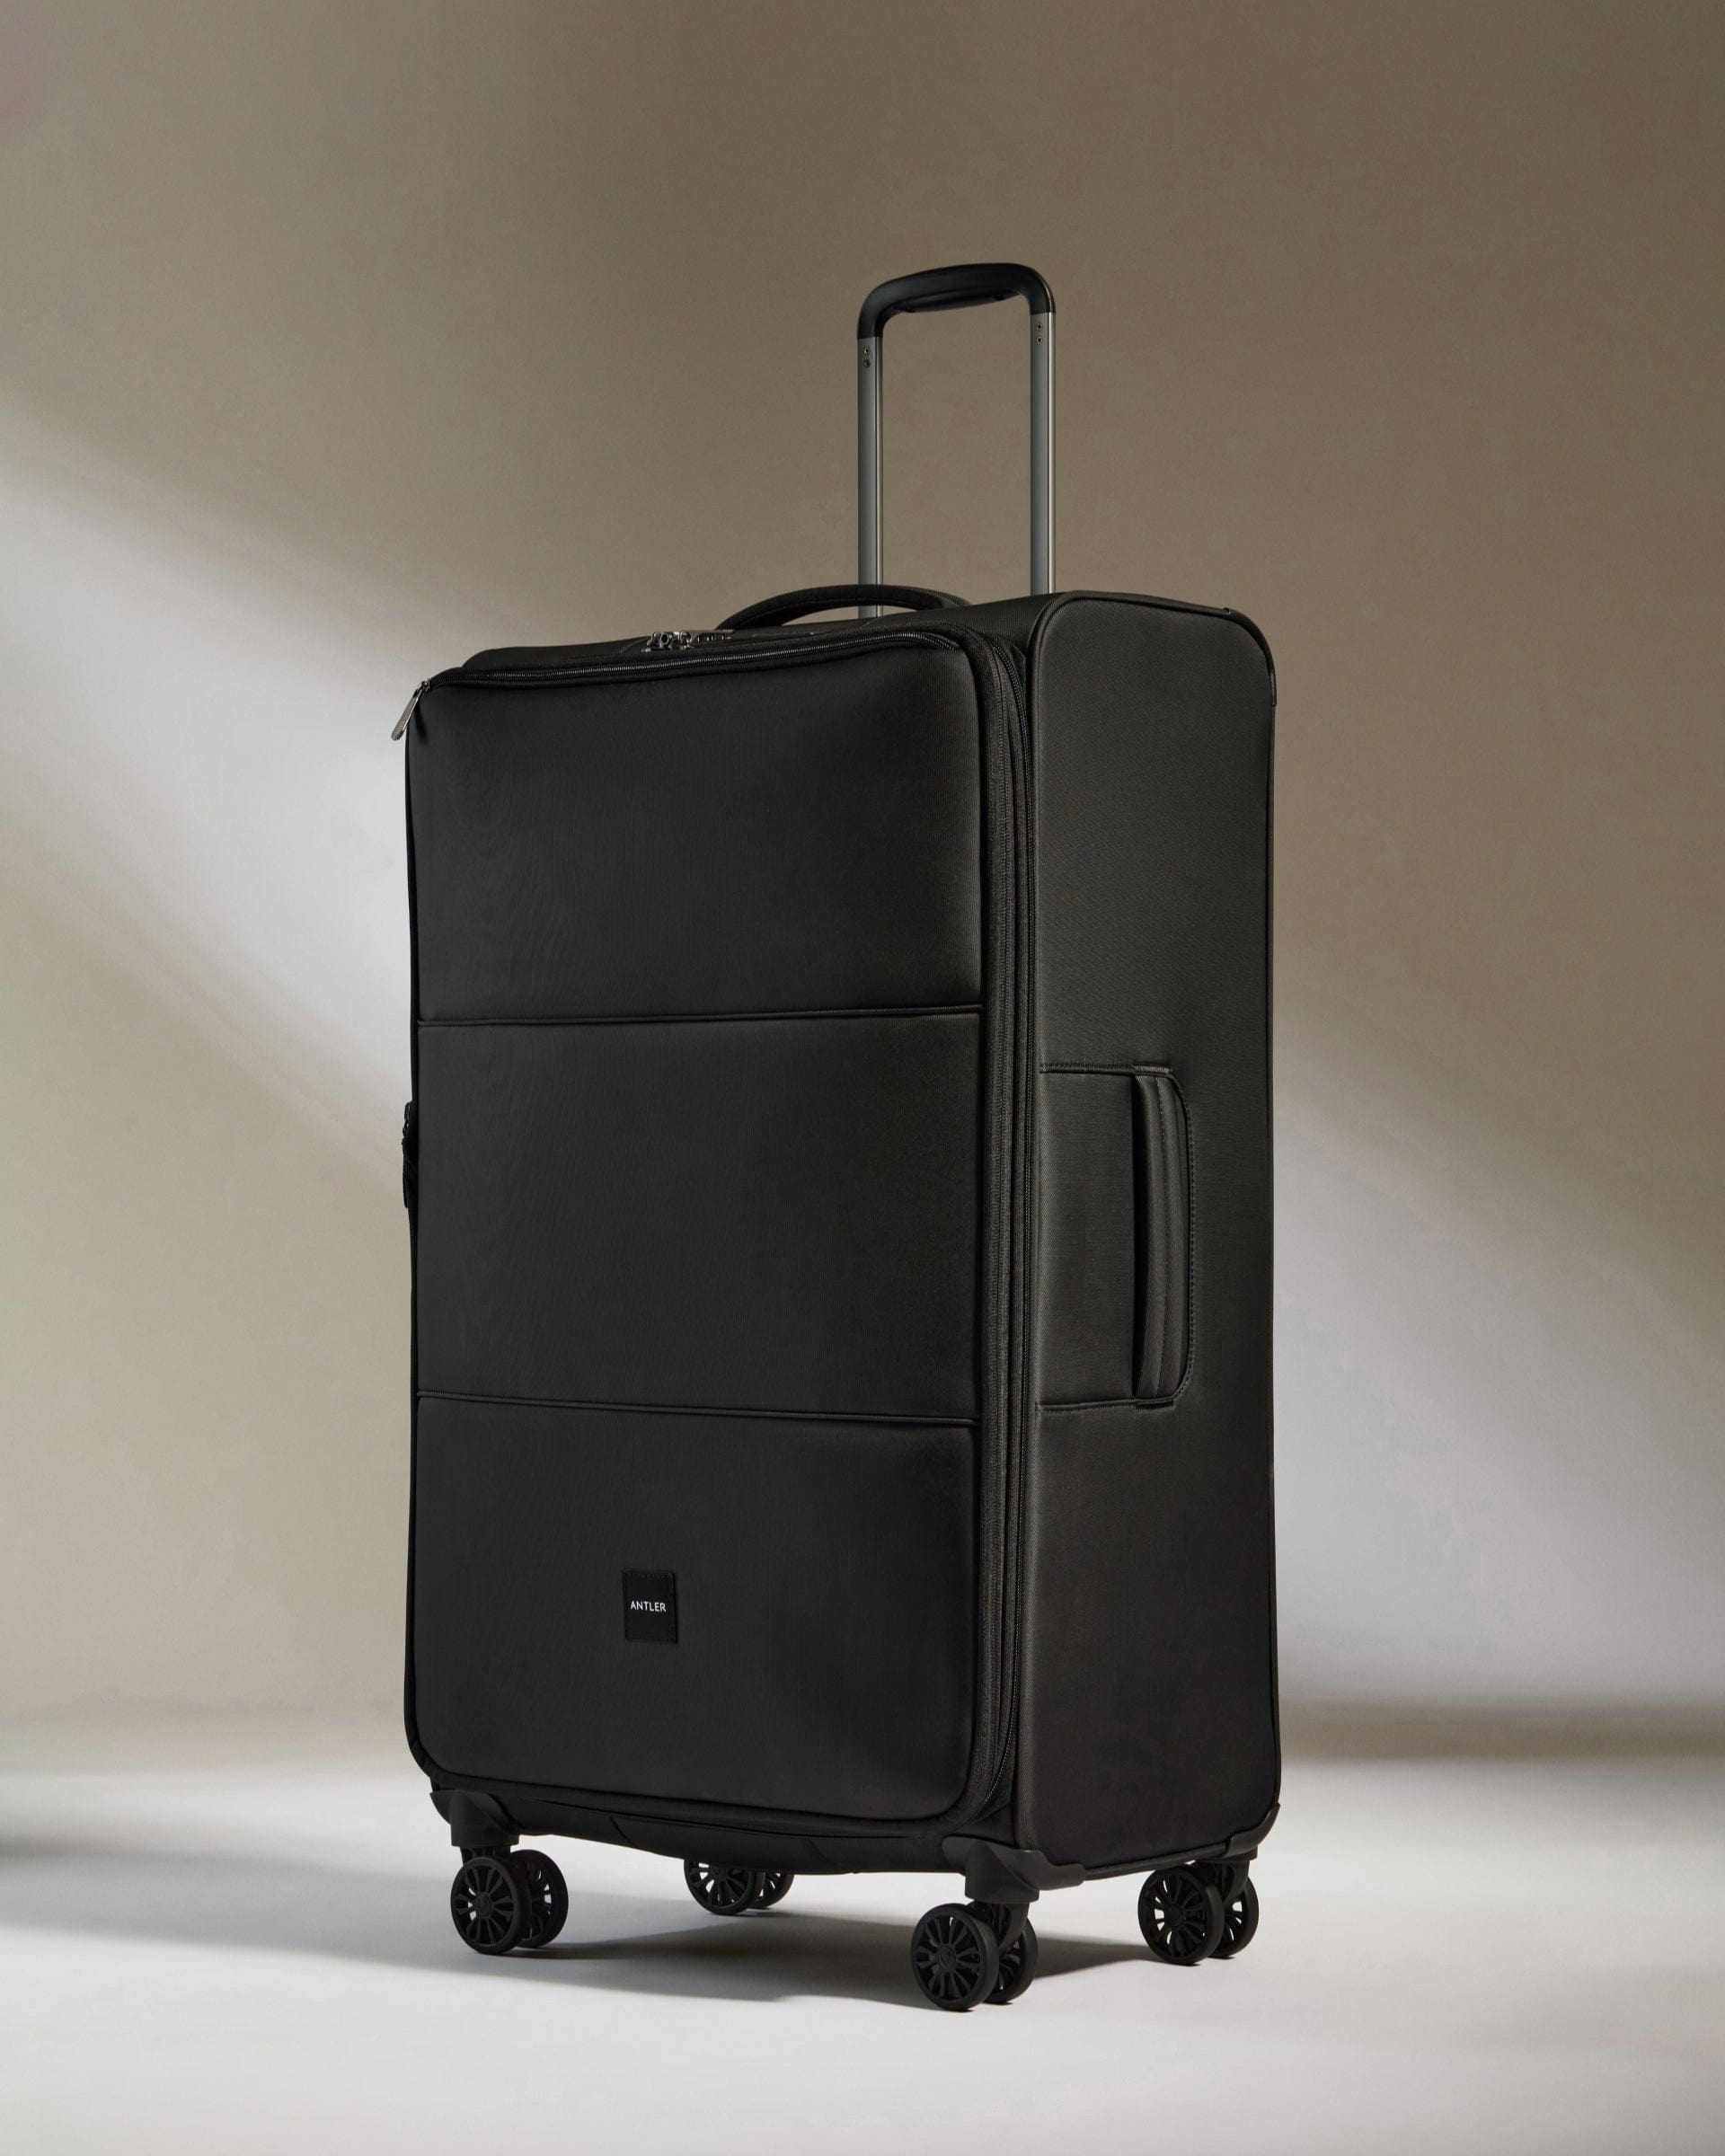 View Antler Soft Stripe Large Suitcase In Black Size 31cm x 83cm x 465cm information